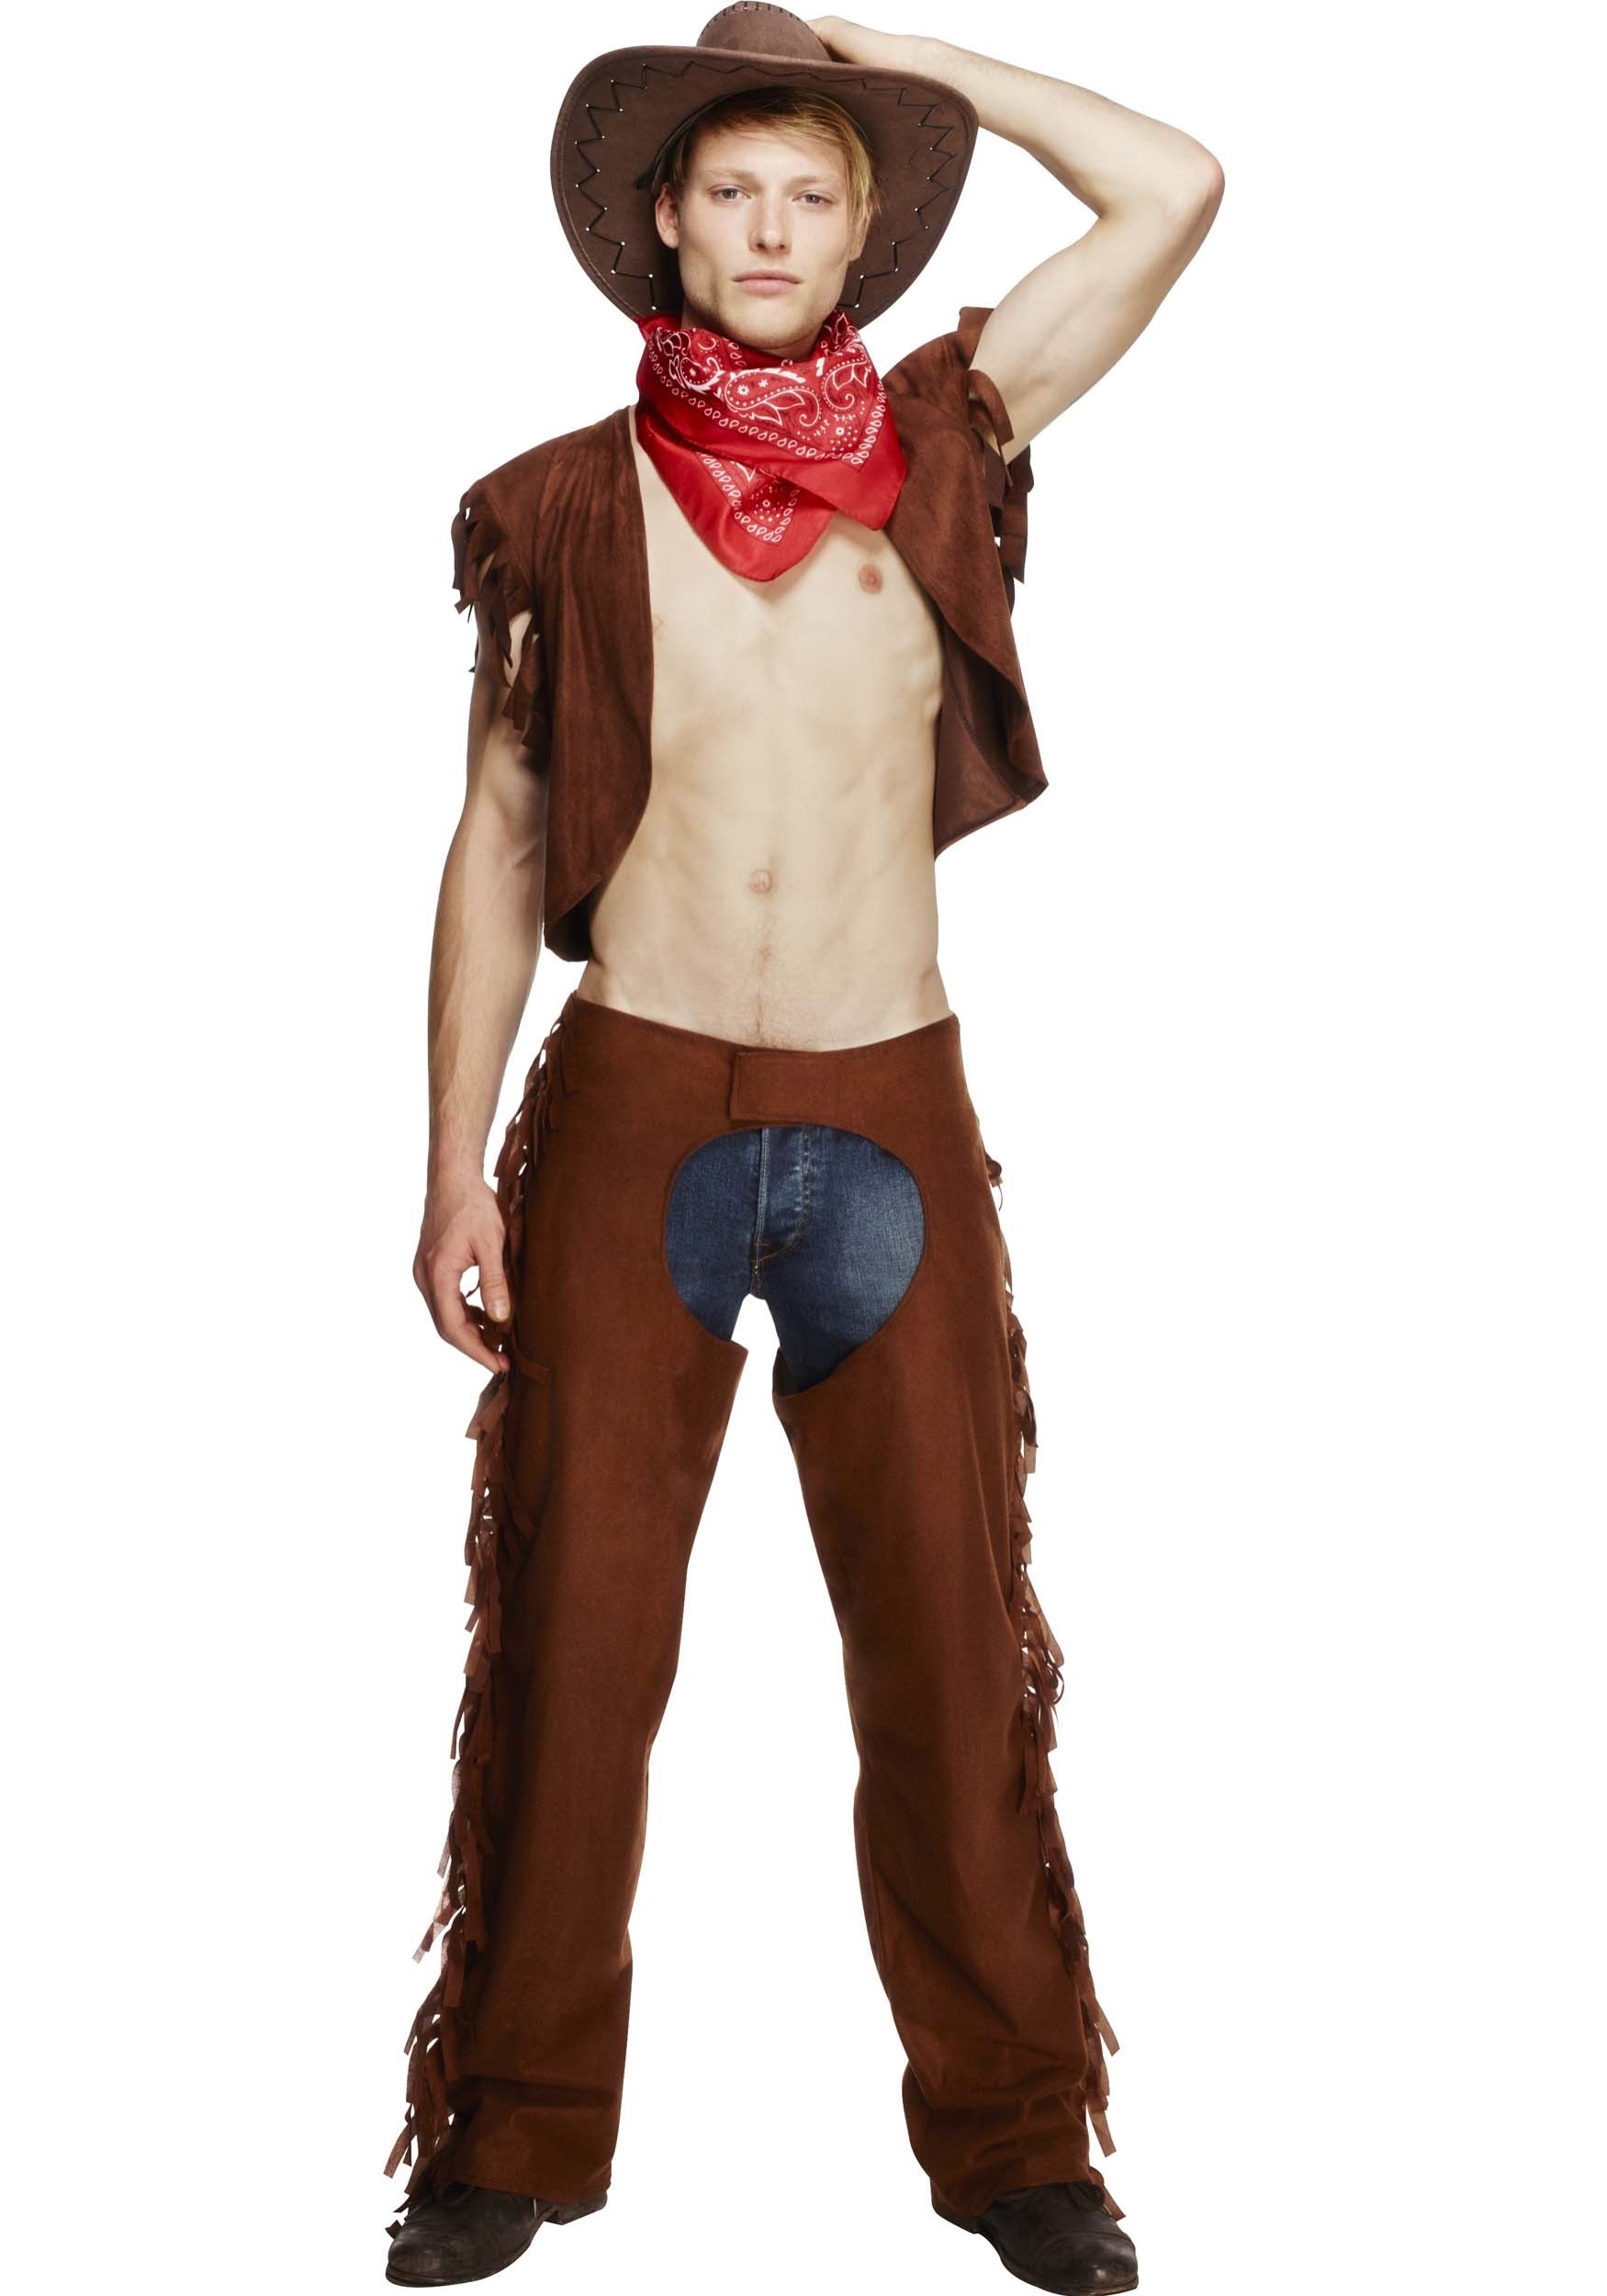 Men's Sexy Cowboy Costume w/ Chaps